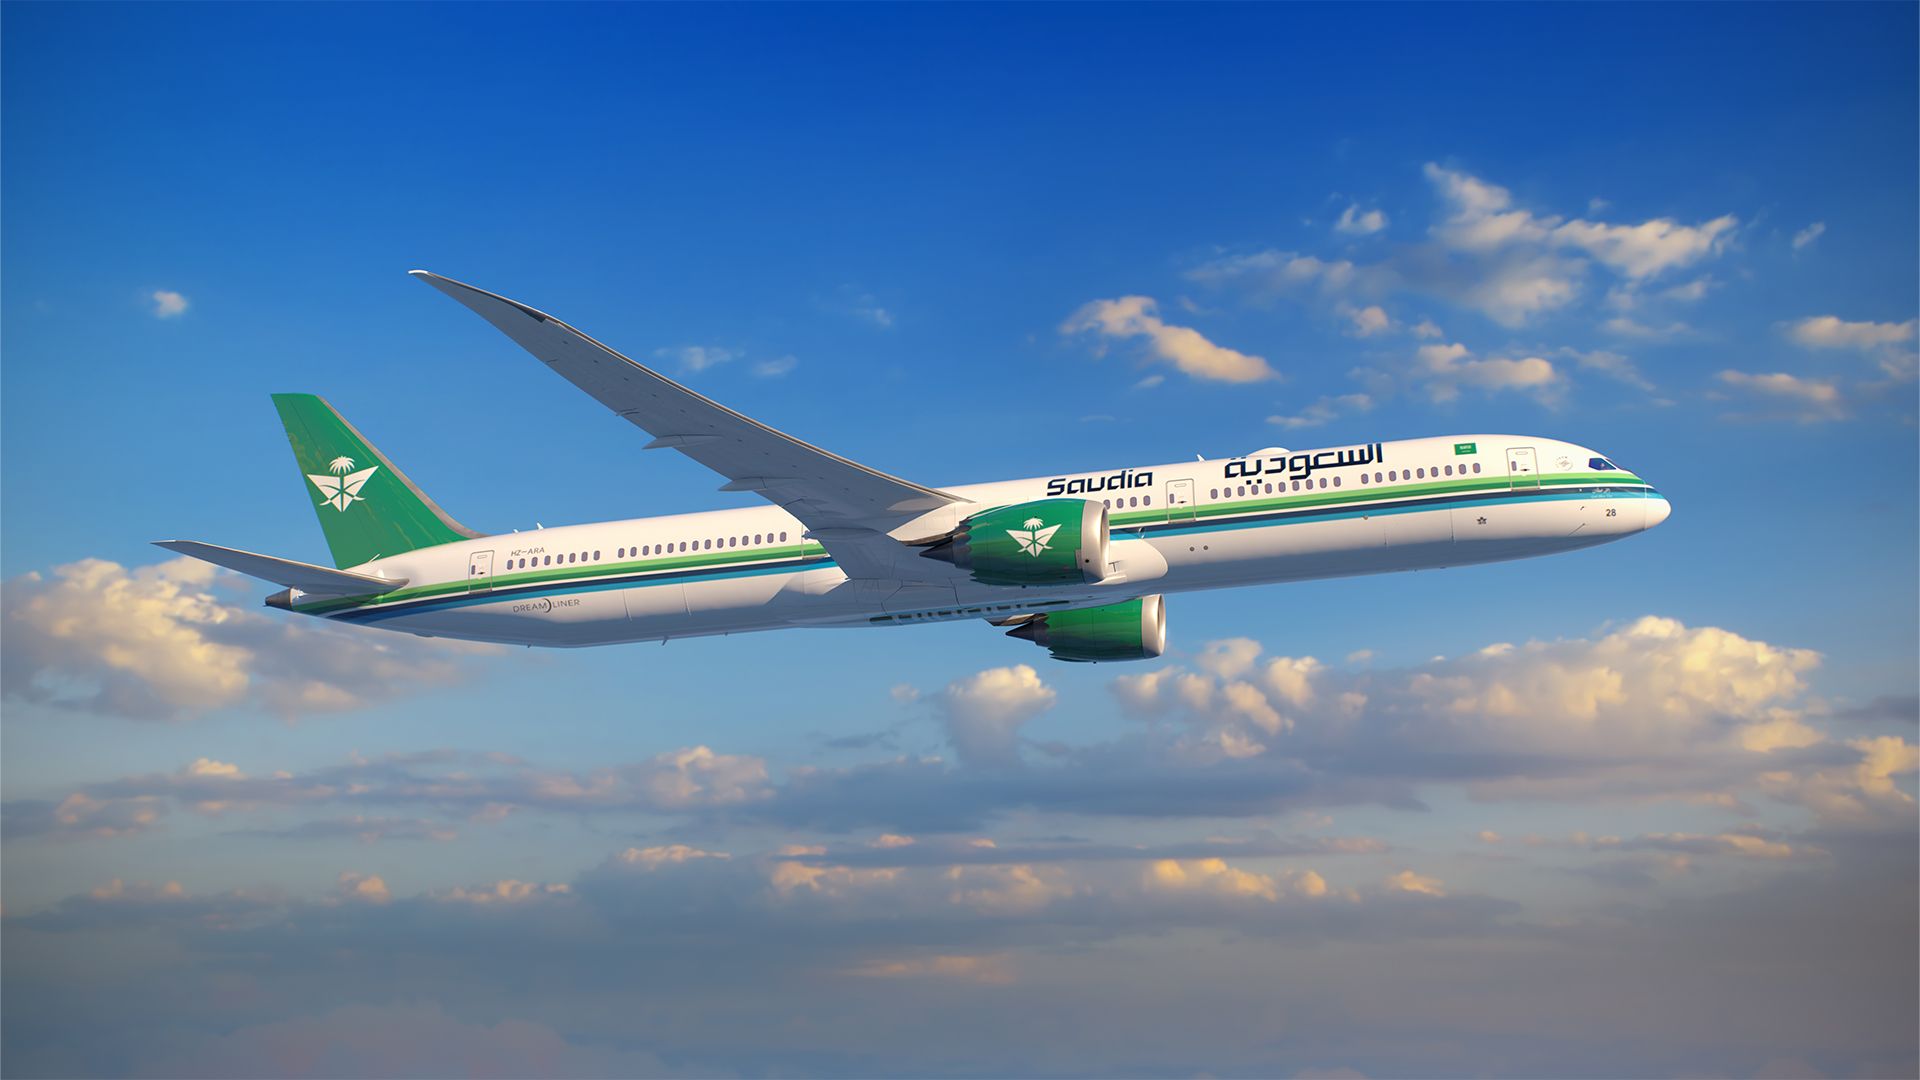 Saudia's new aircraft livery